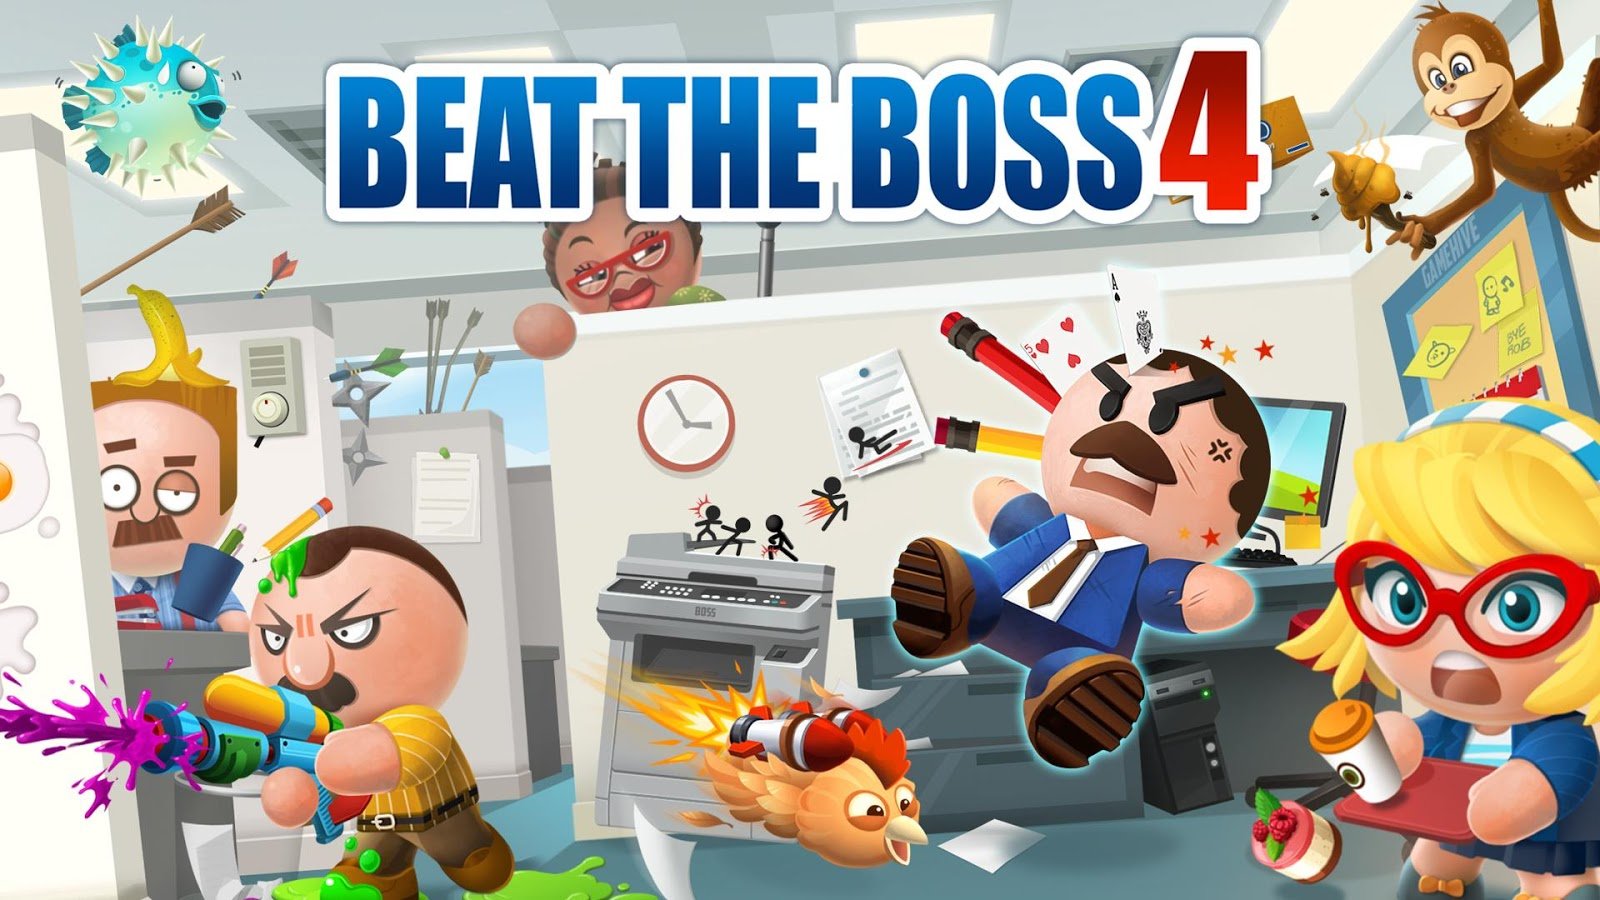 Boss 4 - отомстите своему боссу за все!